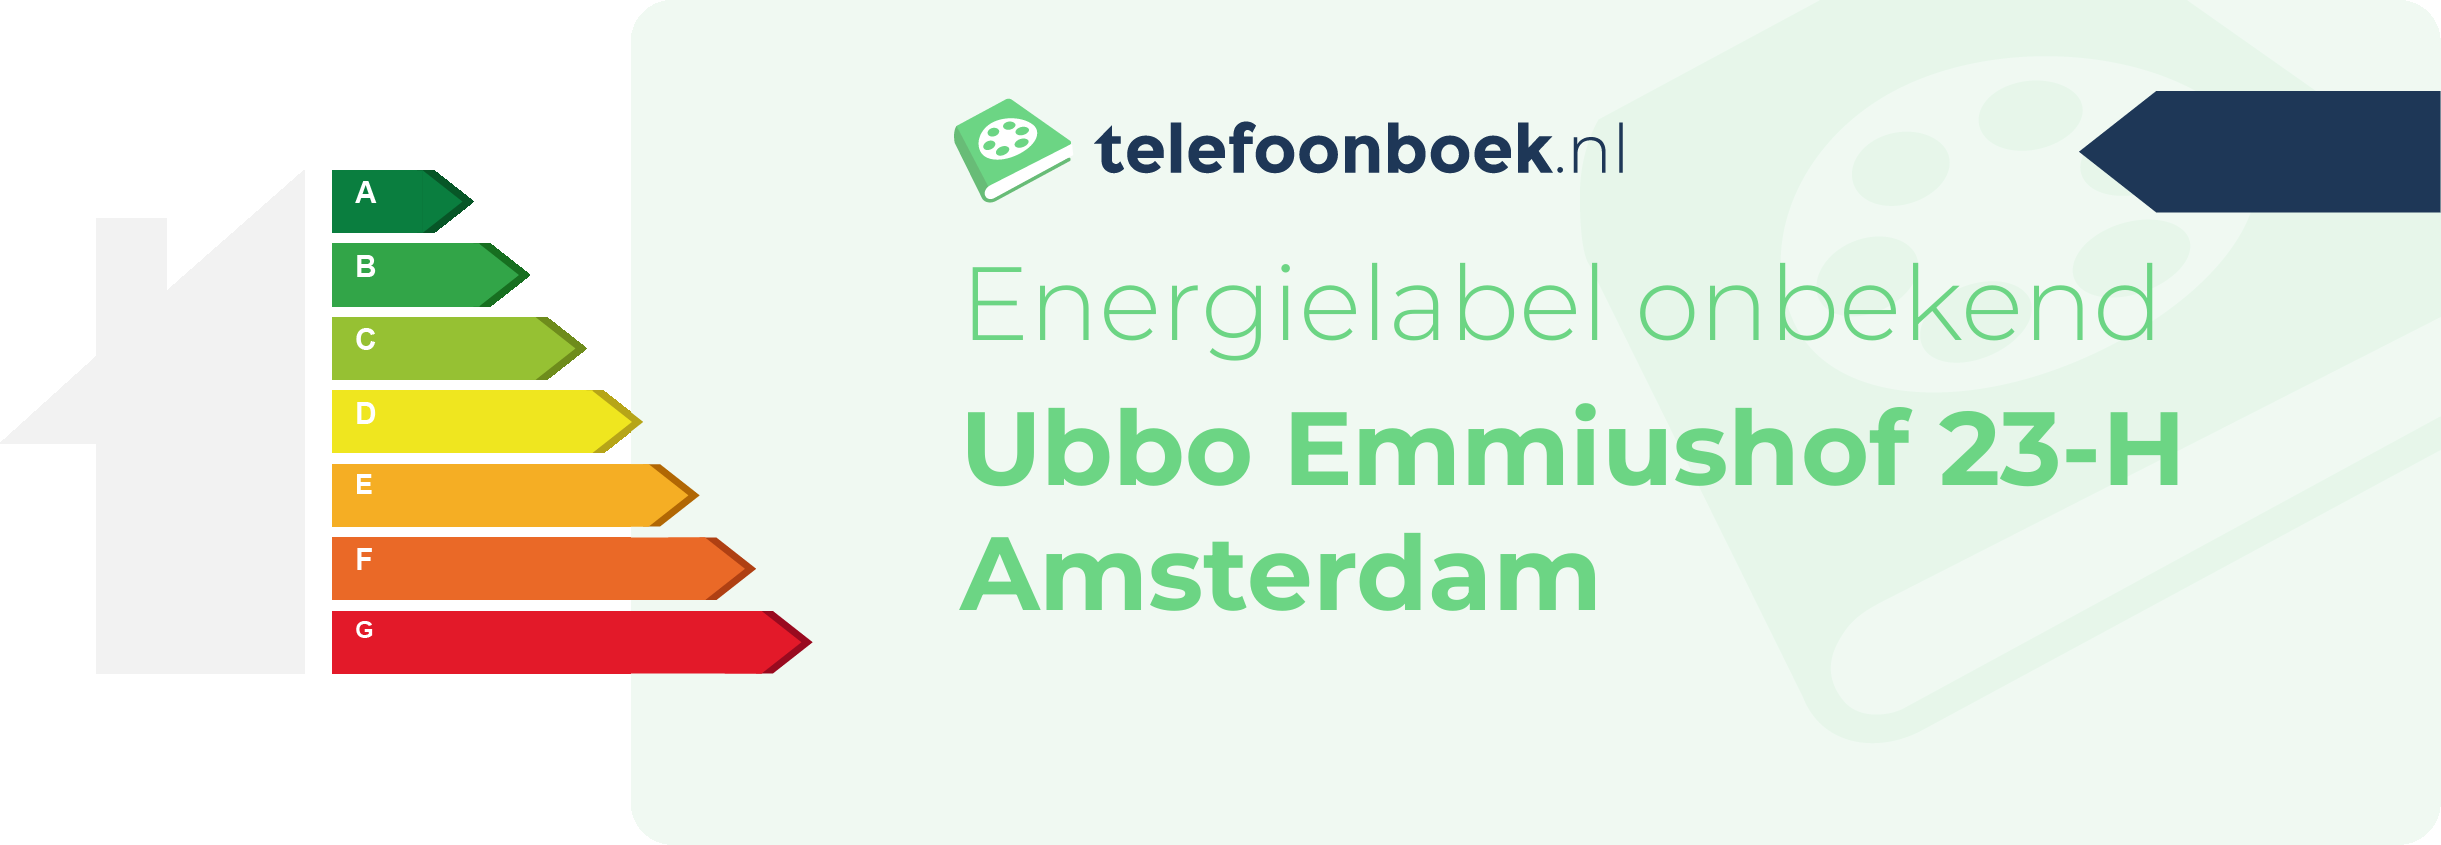 Energielabel Ubbo Emmiushof 23-H Amsterdam